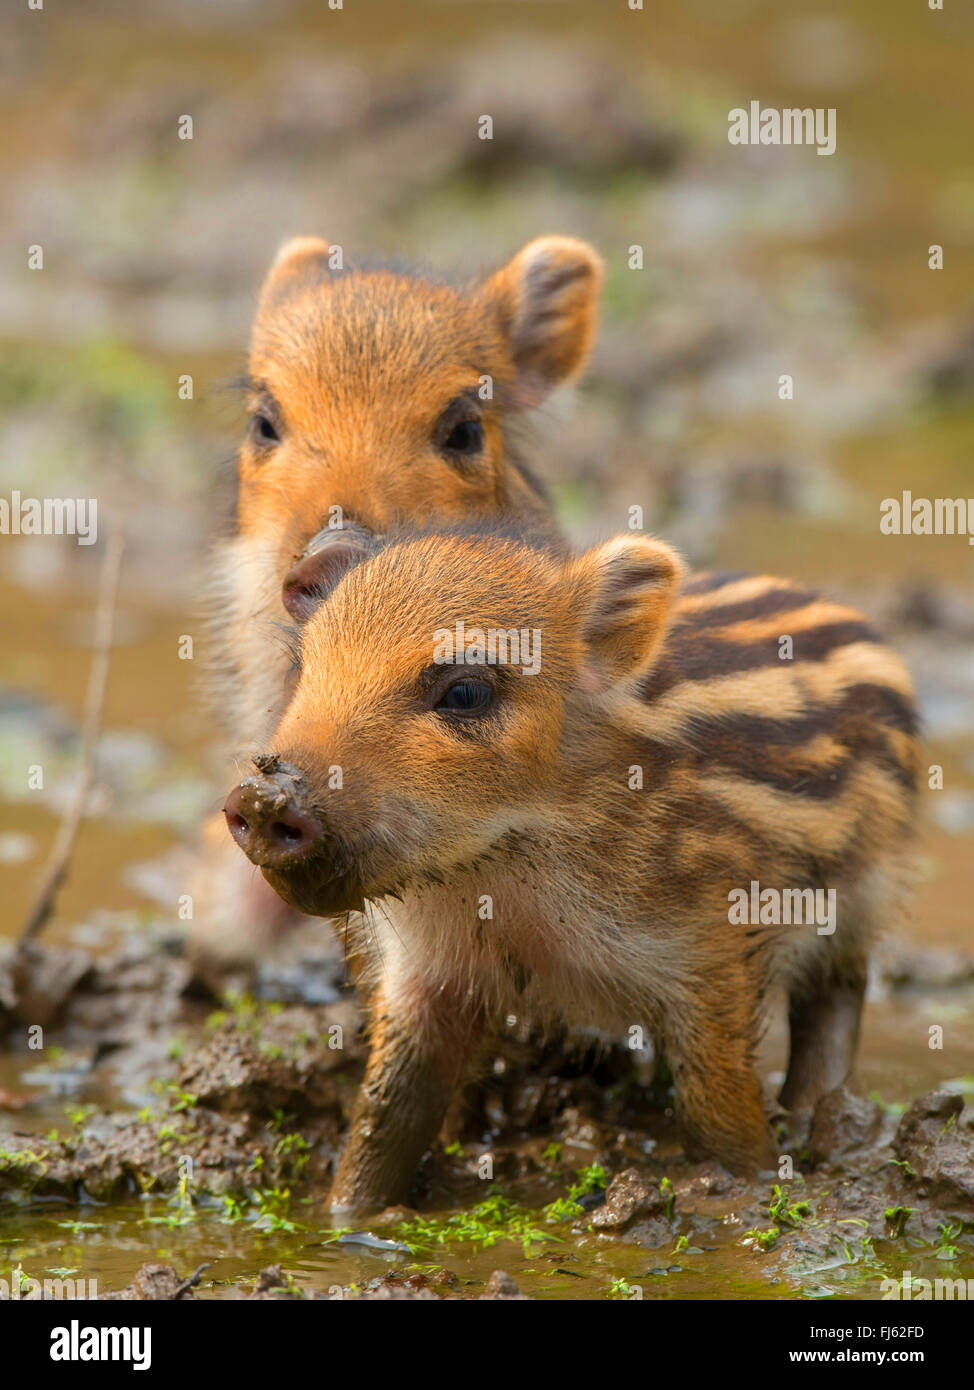 wild boar, pig, wild boar (Sus scrofa), two shoats standing together in mud, Germany, North Rhine-Westphalia, Sauerland Stock Photo